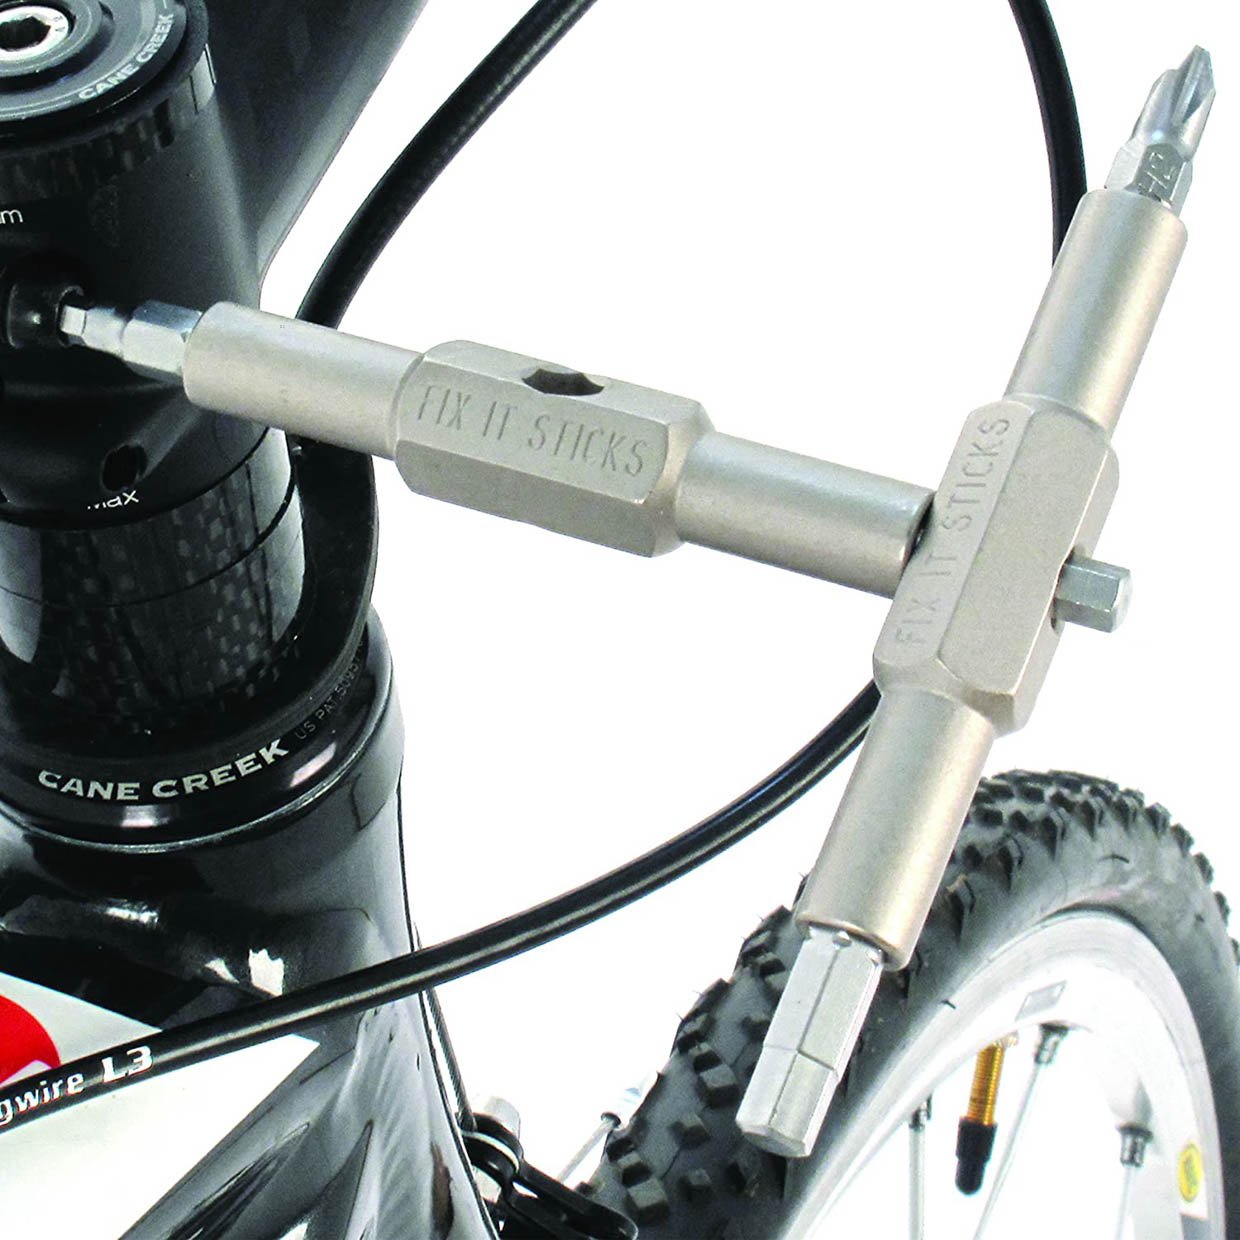 Fix It Sticks Mountain Bike Tool Kit